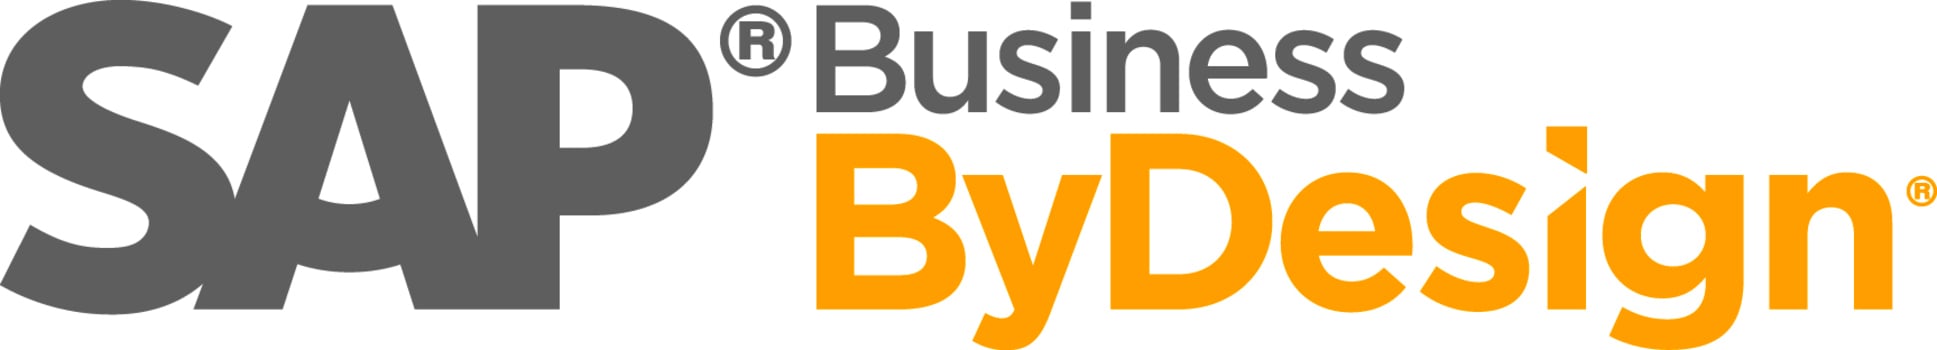 SAP_Business_ByDesign-1